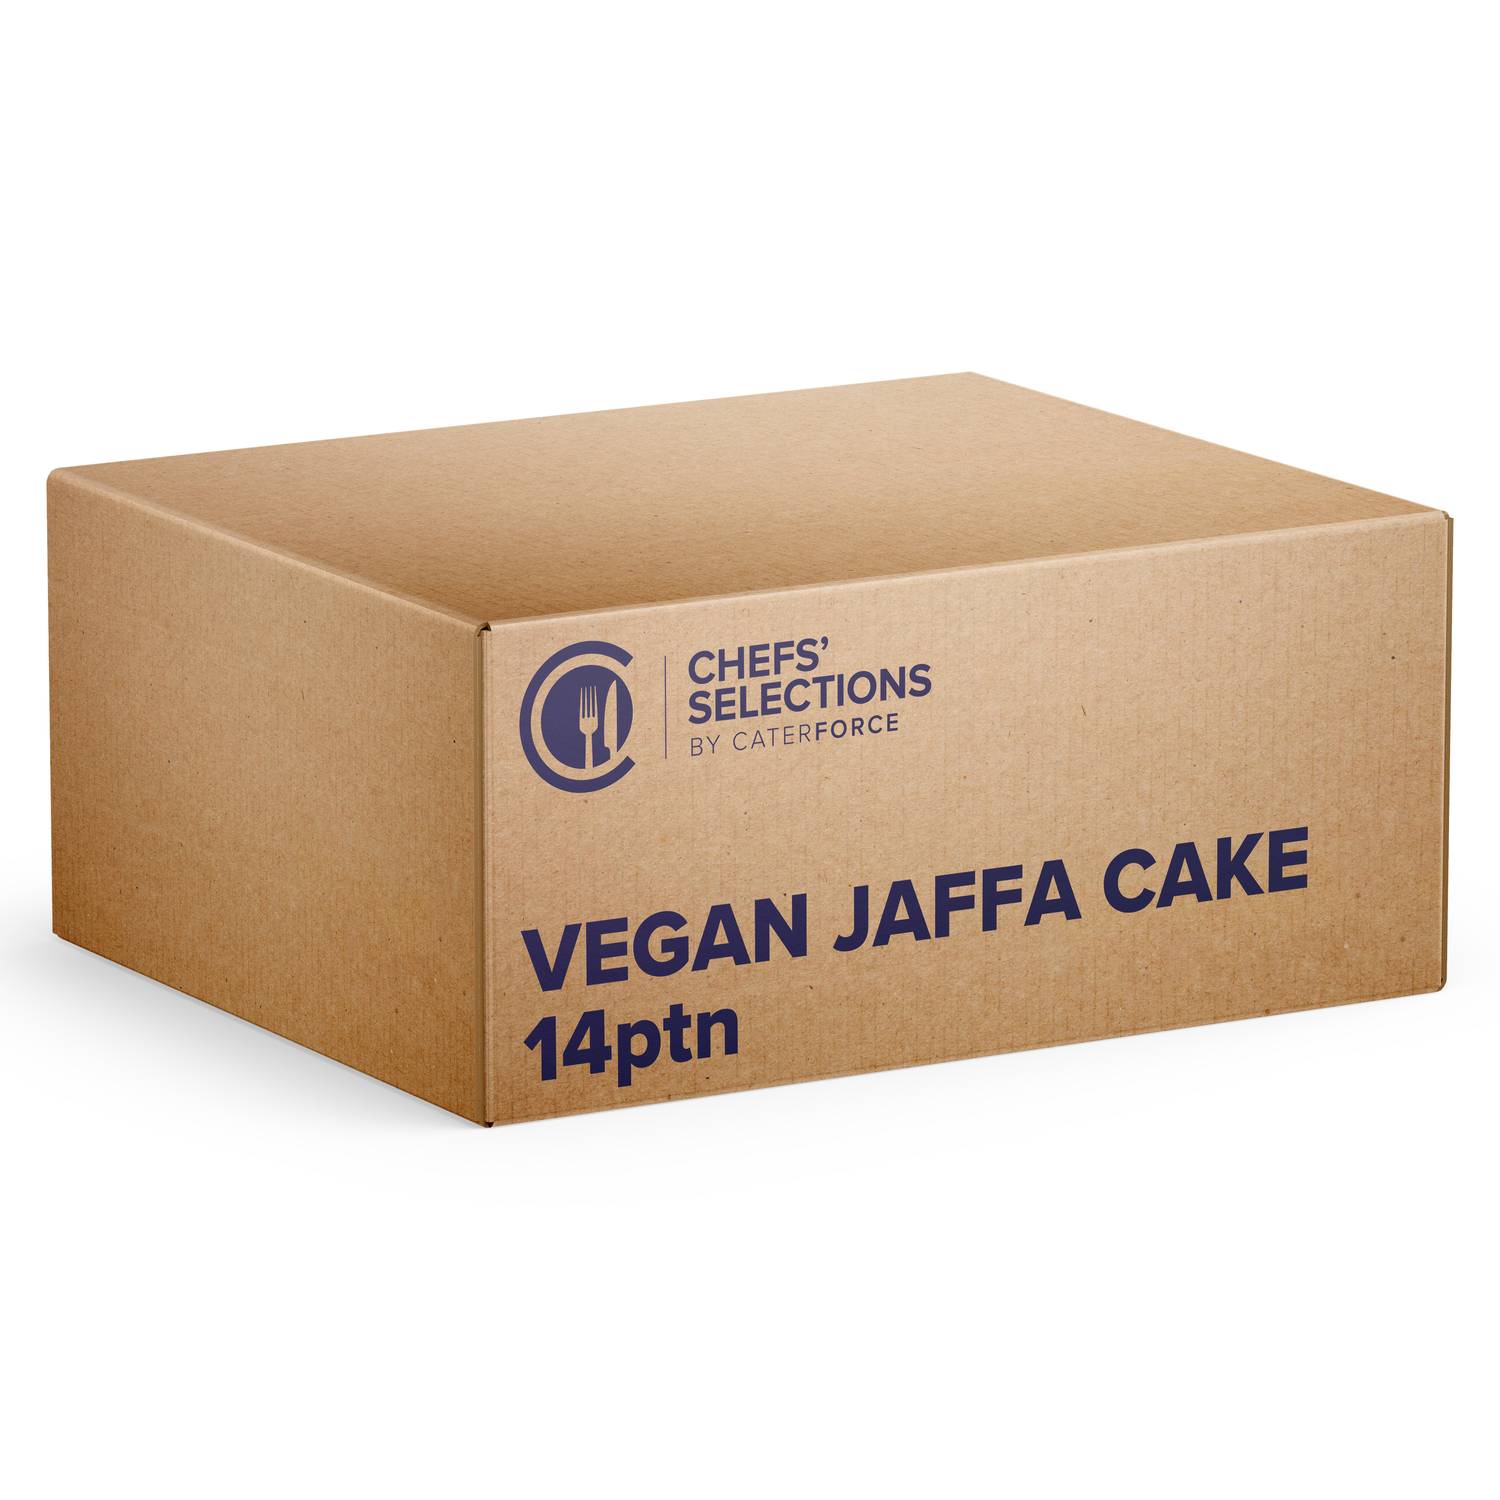 Chefs’ Selections Vegan Jaffa Cake (1 x 14p/ptn)